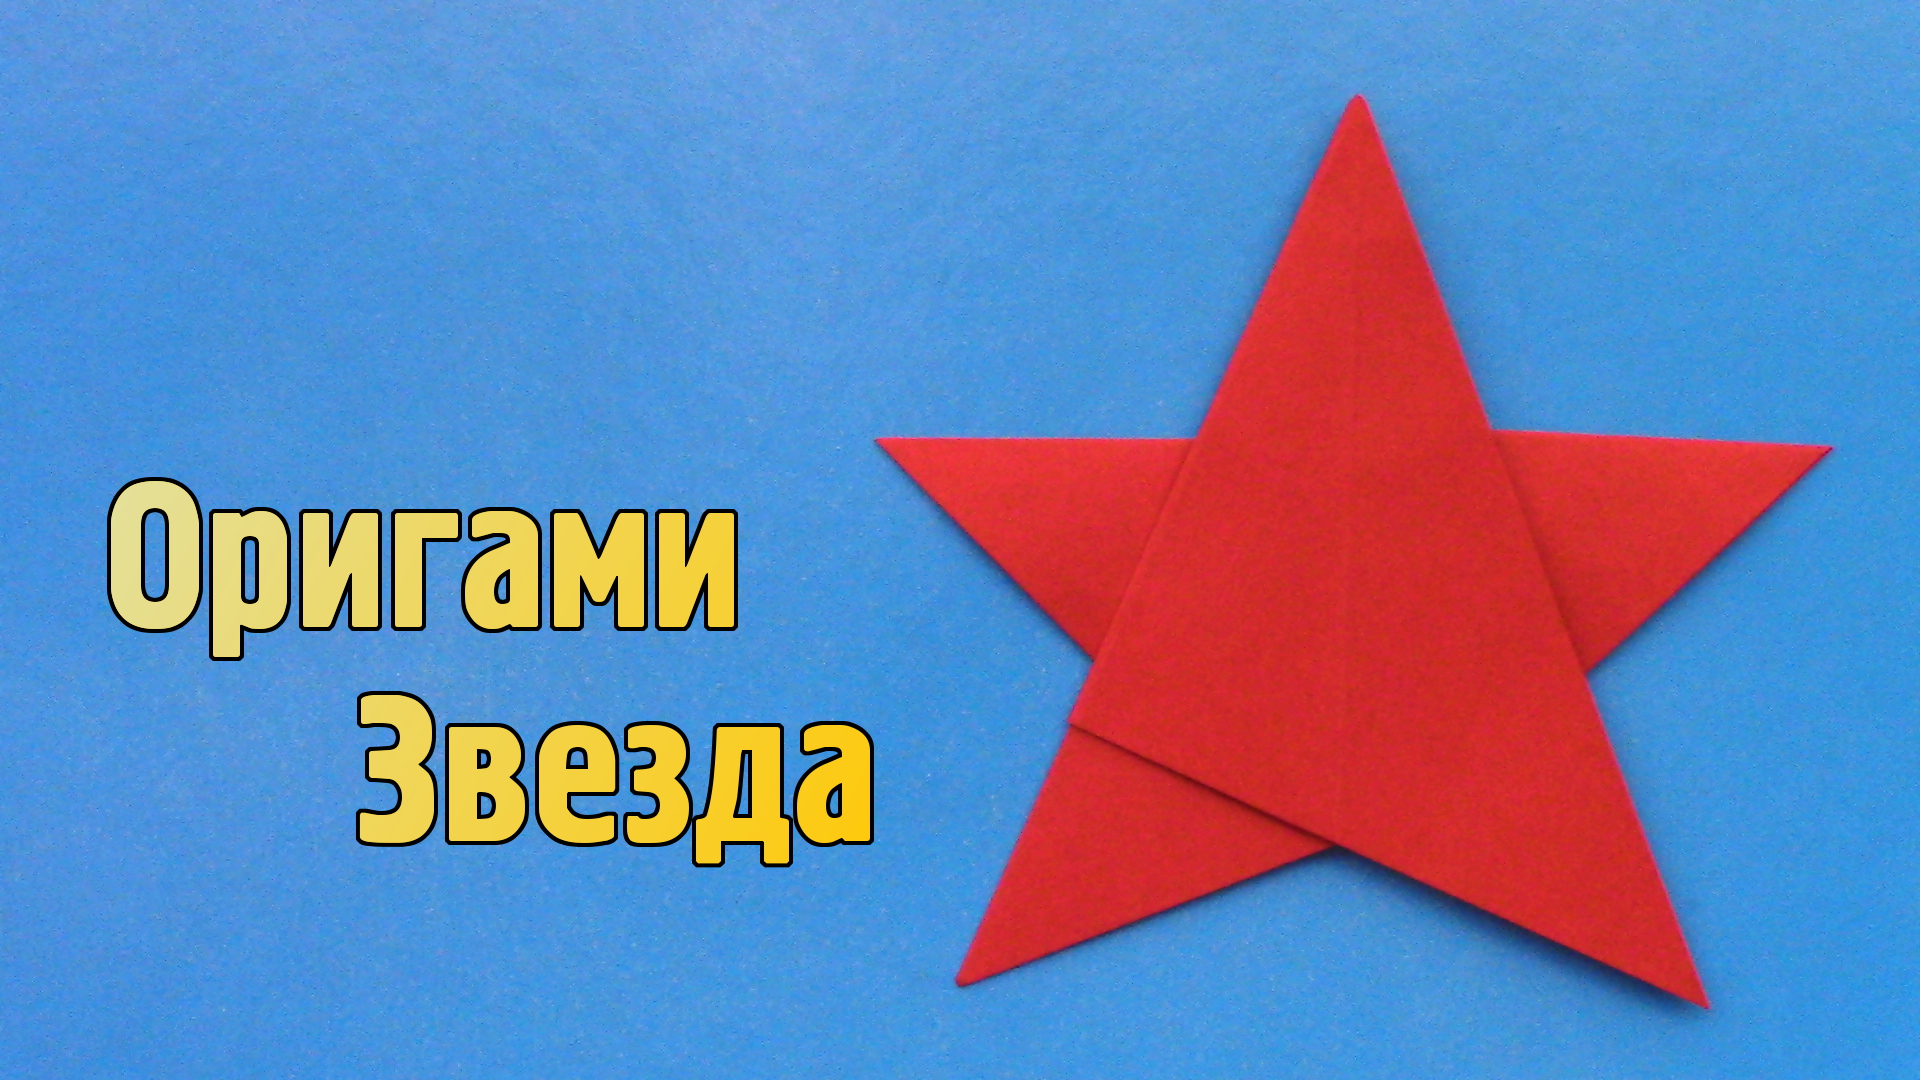 Оригами объёмая звёздочка